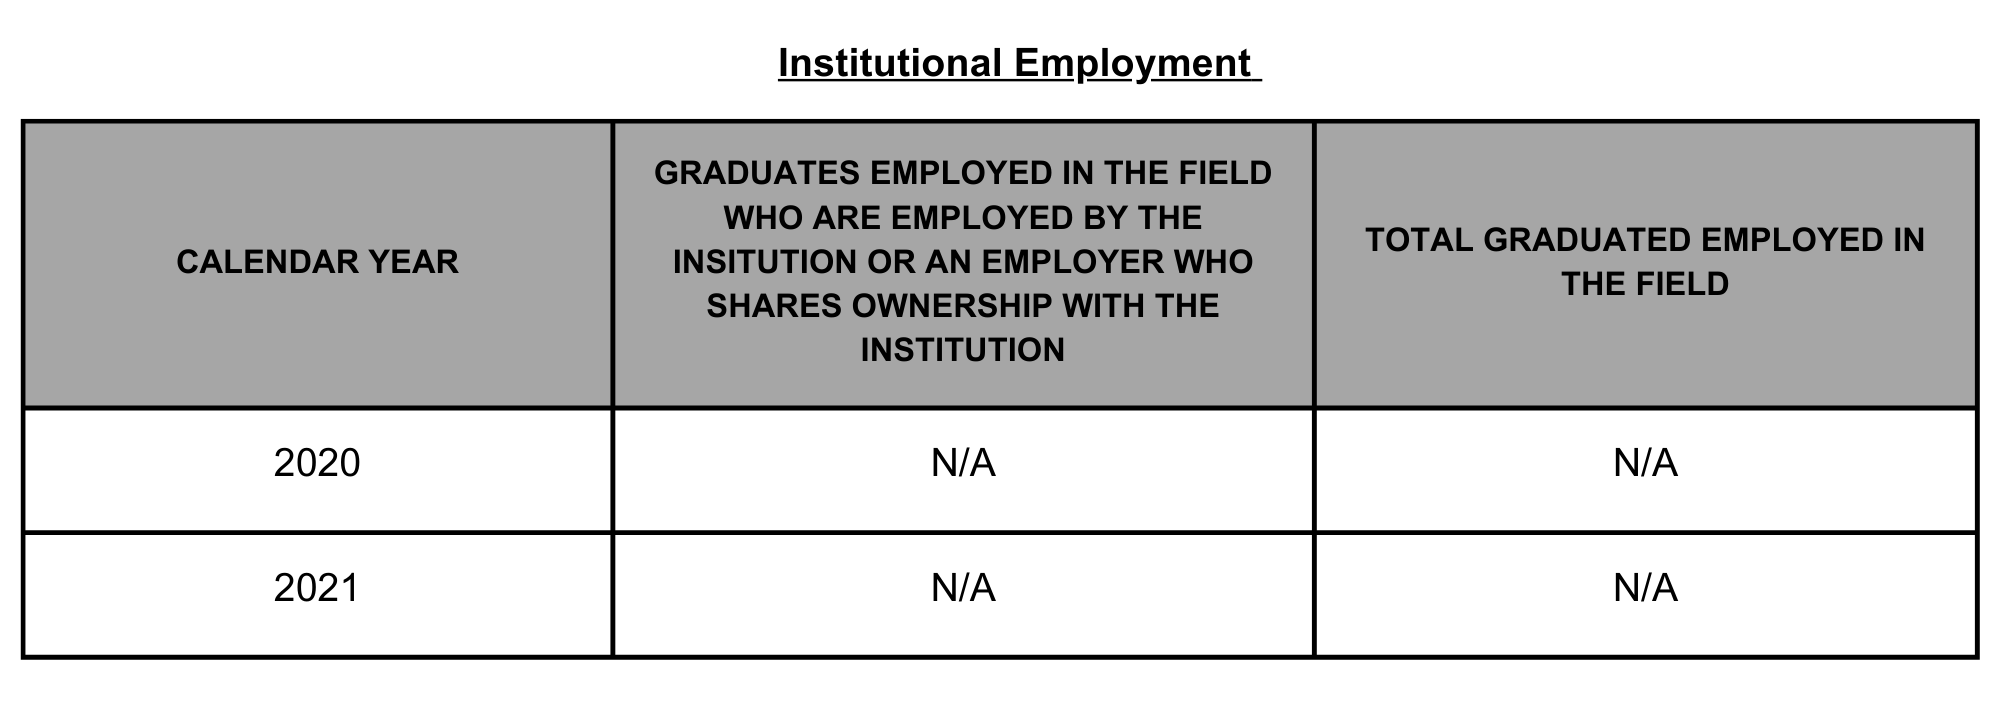 06 SPFS Institutional Employment PRACTICAL PIF OL CA